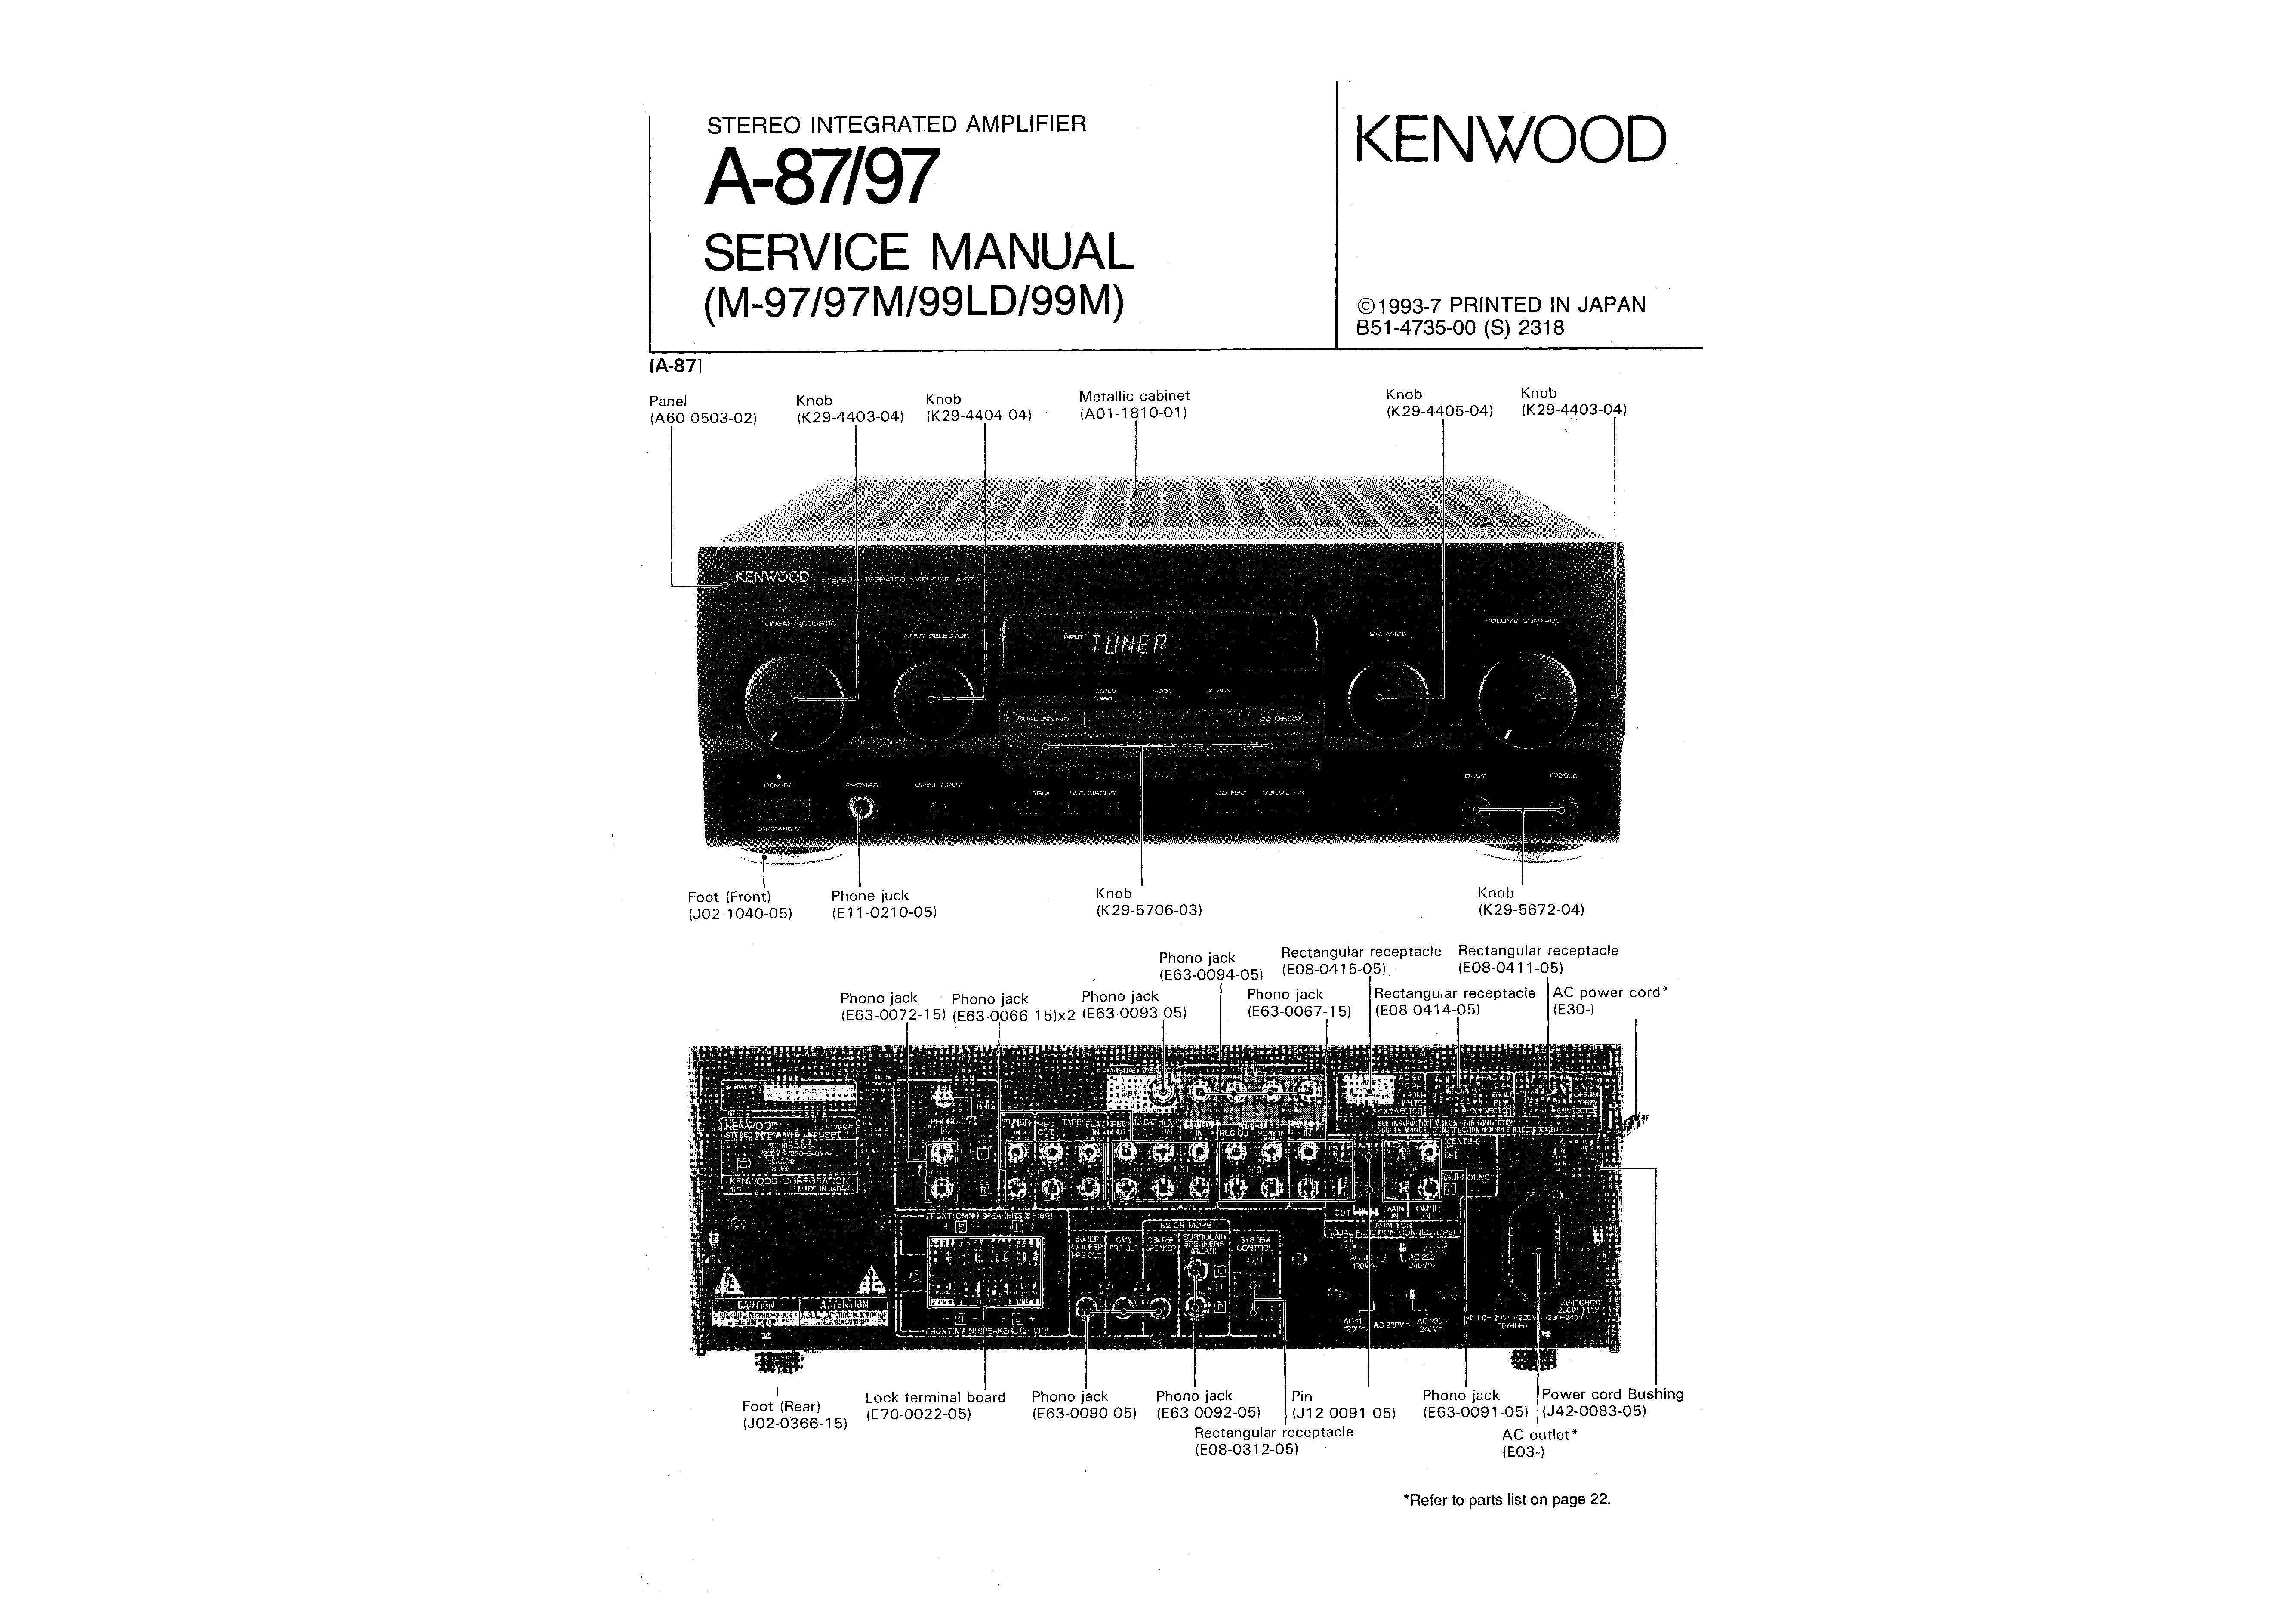 Kenwood A-87